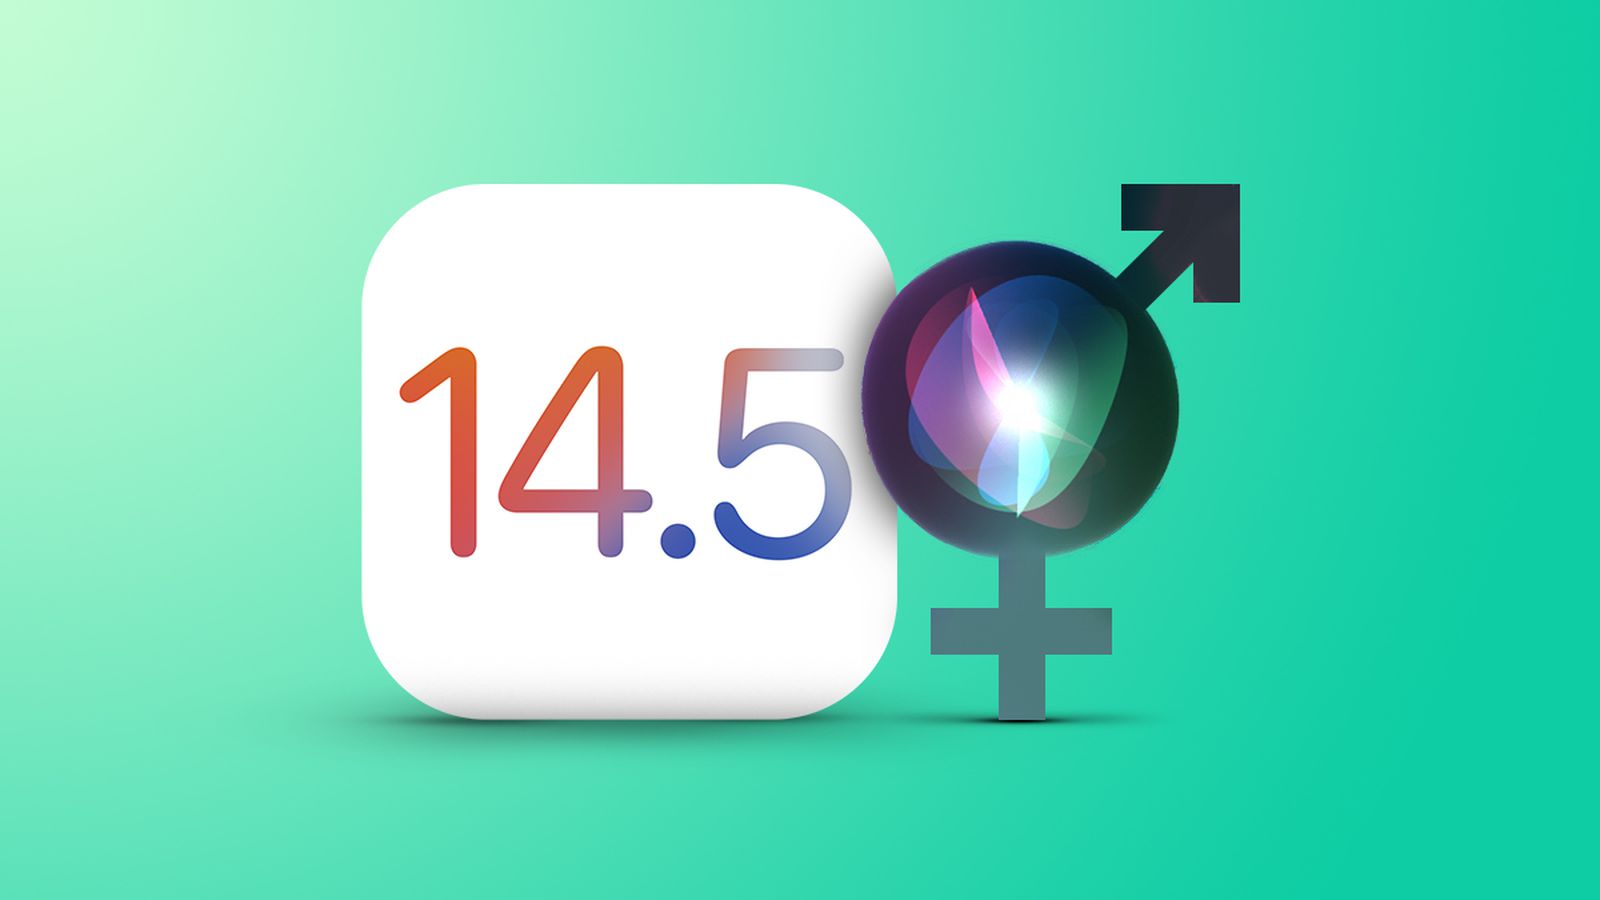 iOS 14.5 Adds New Siri Voices, No Longer Defaults to Female - MacRumors